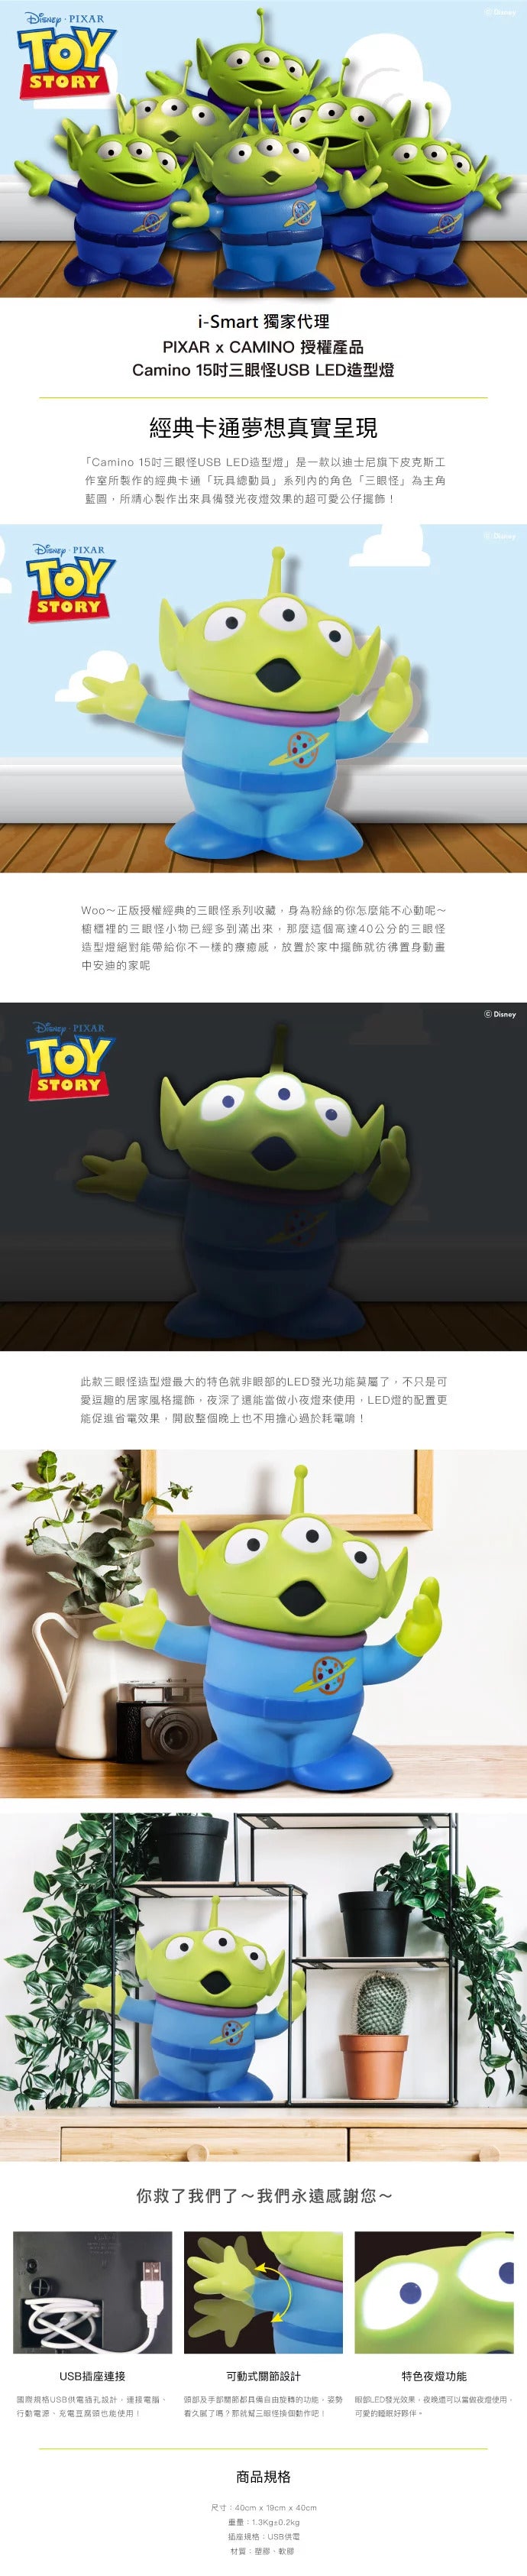 Toystory Alien USB LED Light - up-next.com.hk